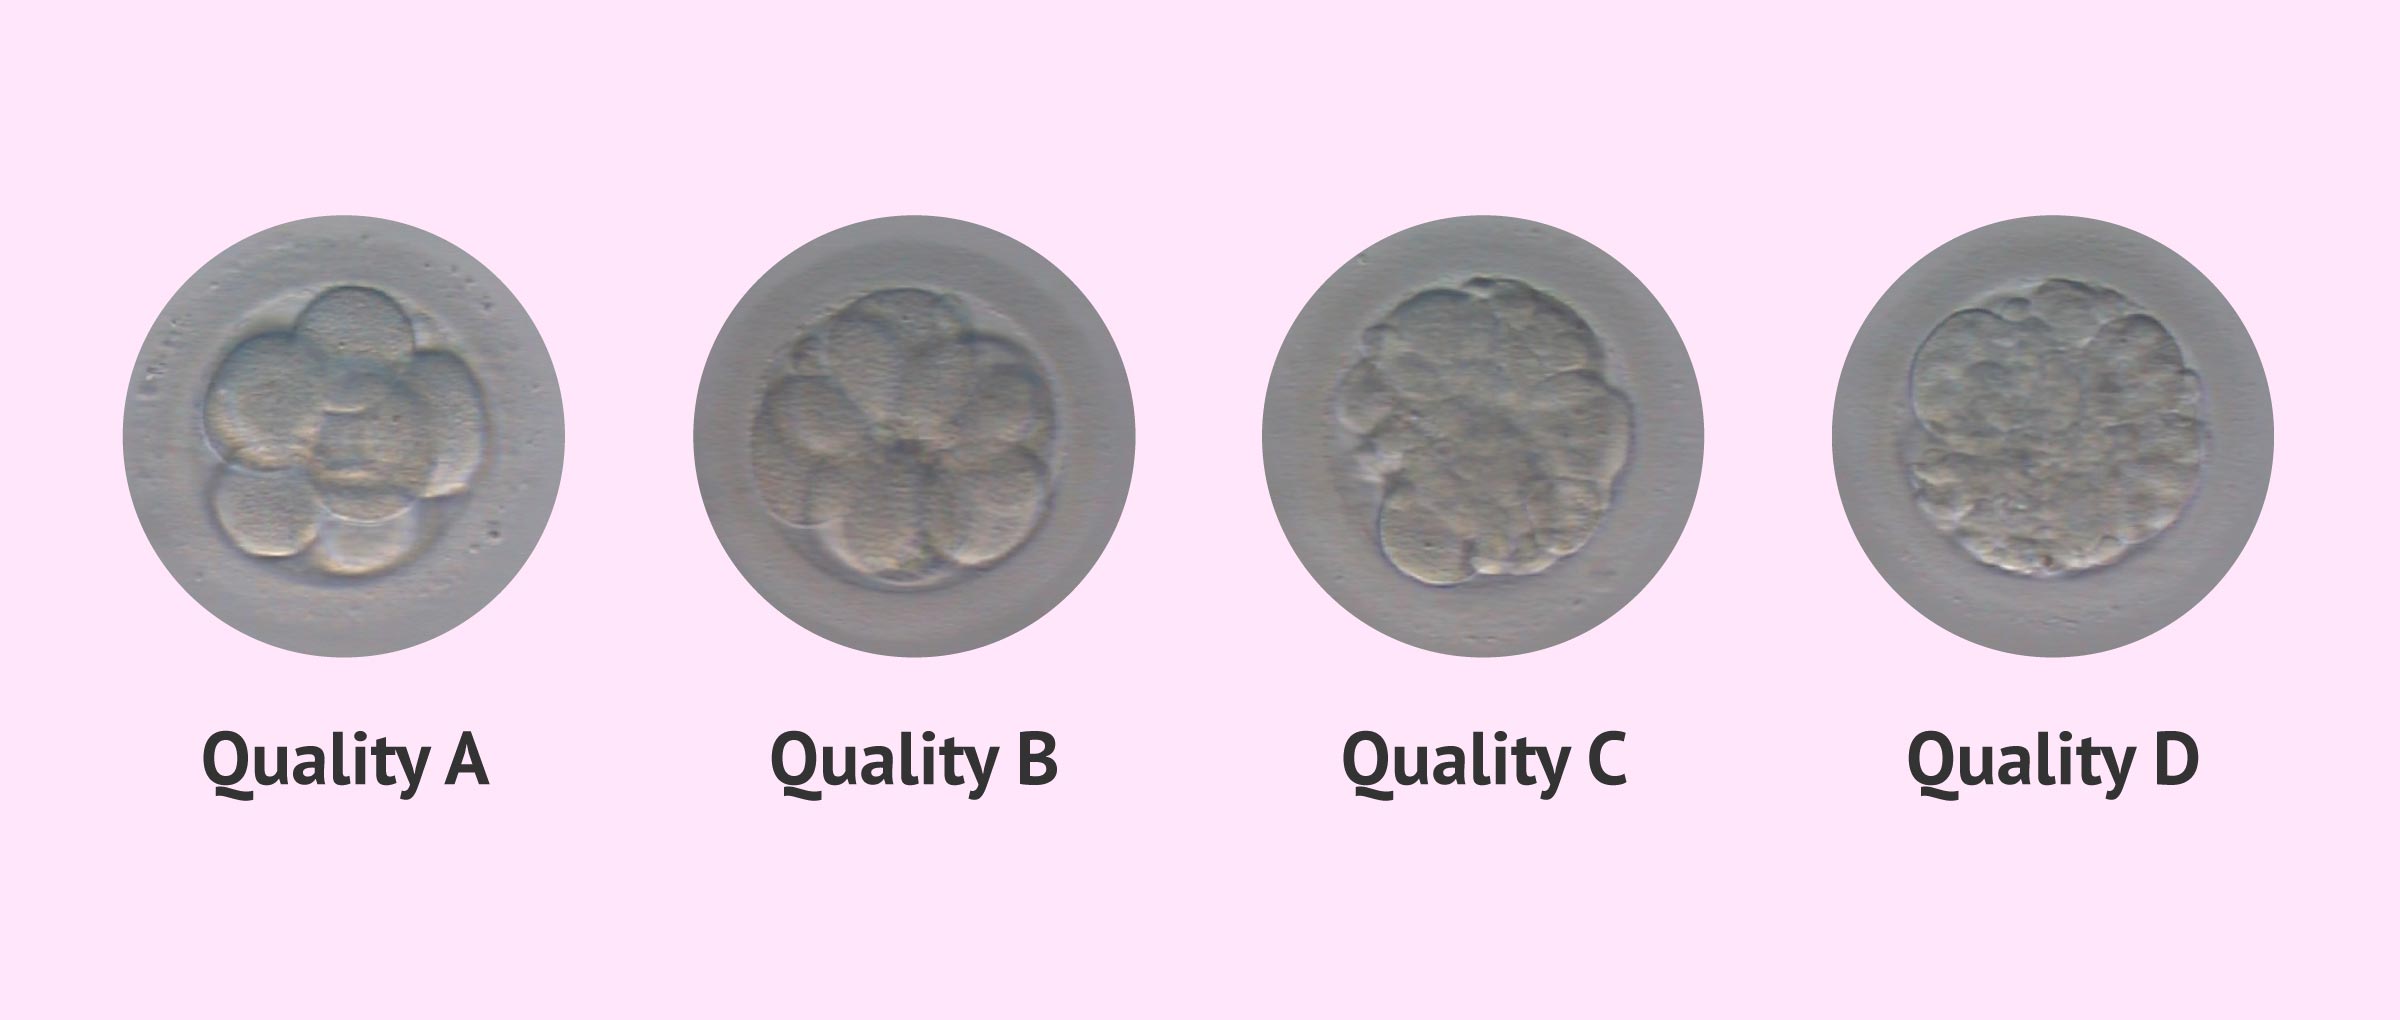 embryos-quality-a-b-c-d